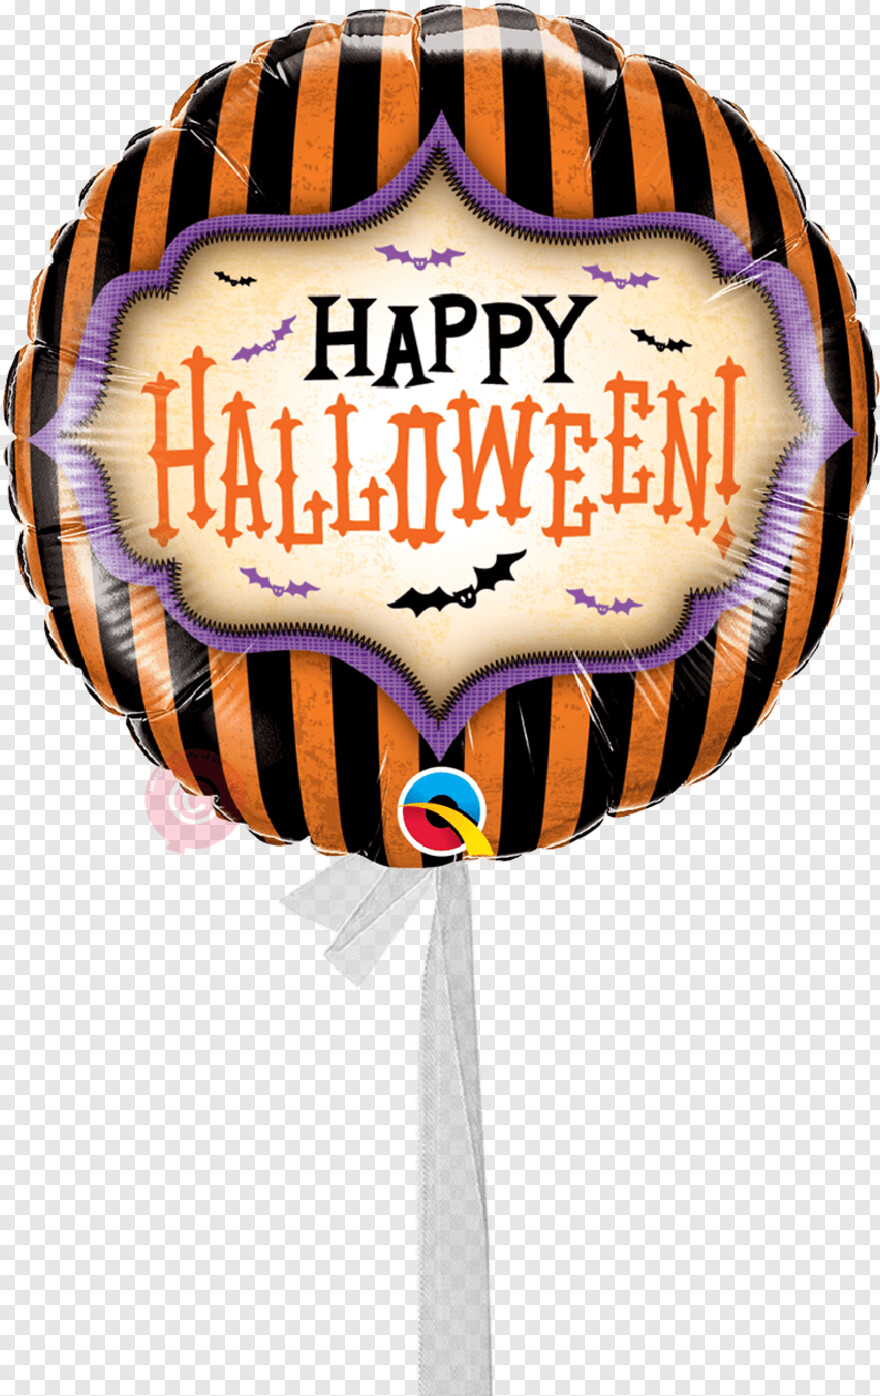  Halloween Border, Halloween Party, Happy Birthday Balloons, Halloween Candy, Happy Halloween, Halloween Ghost